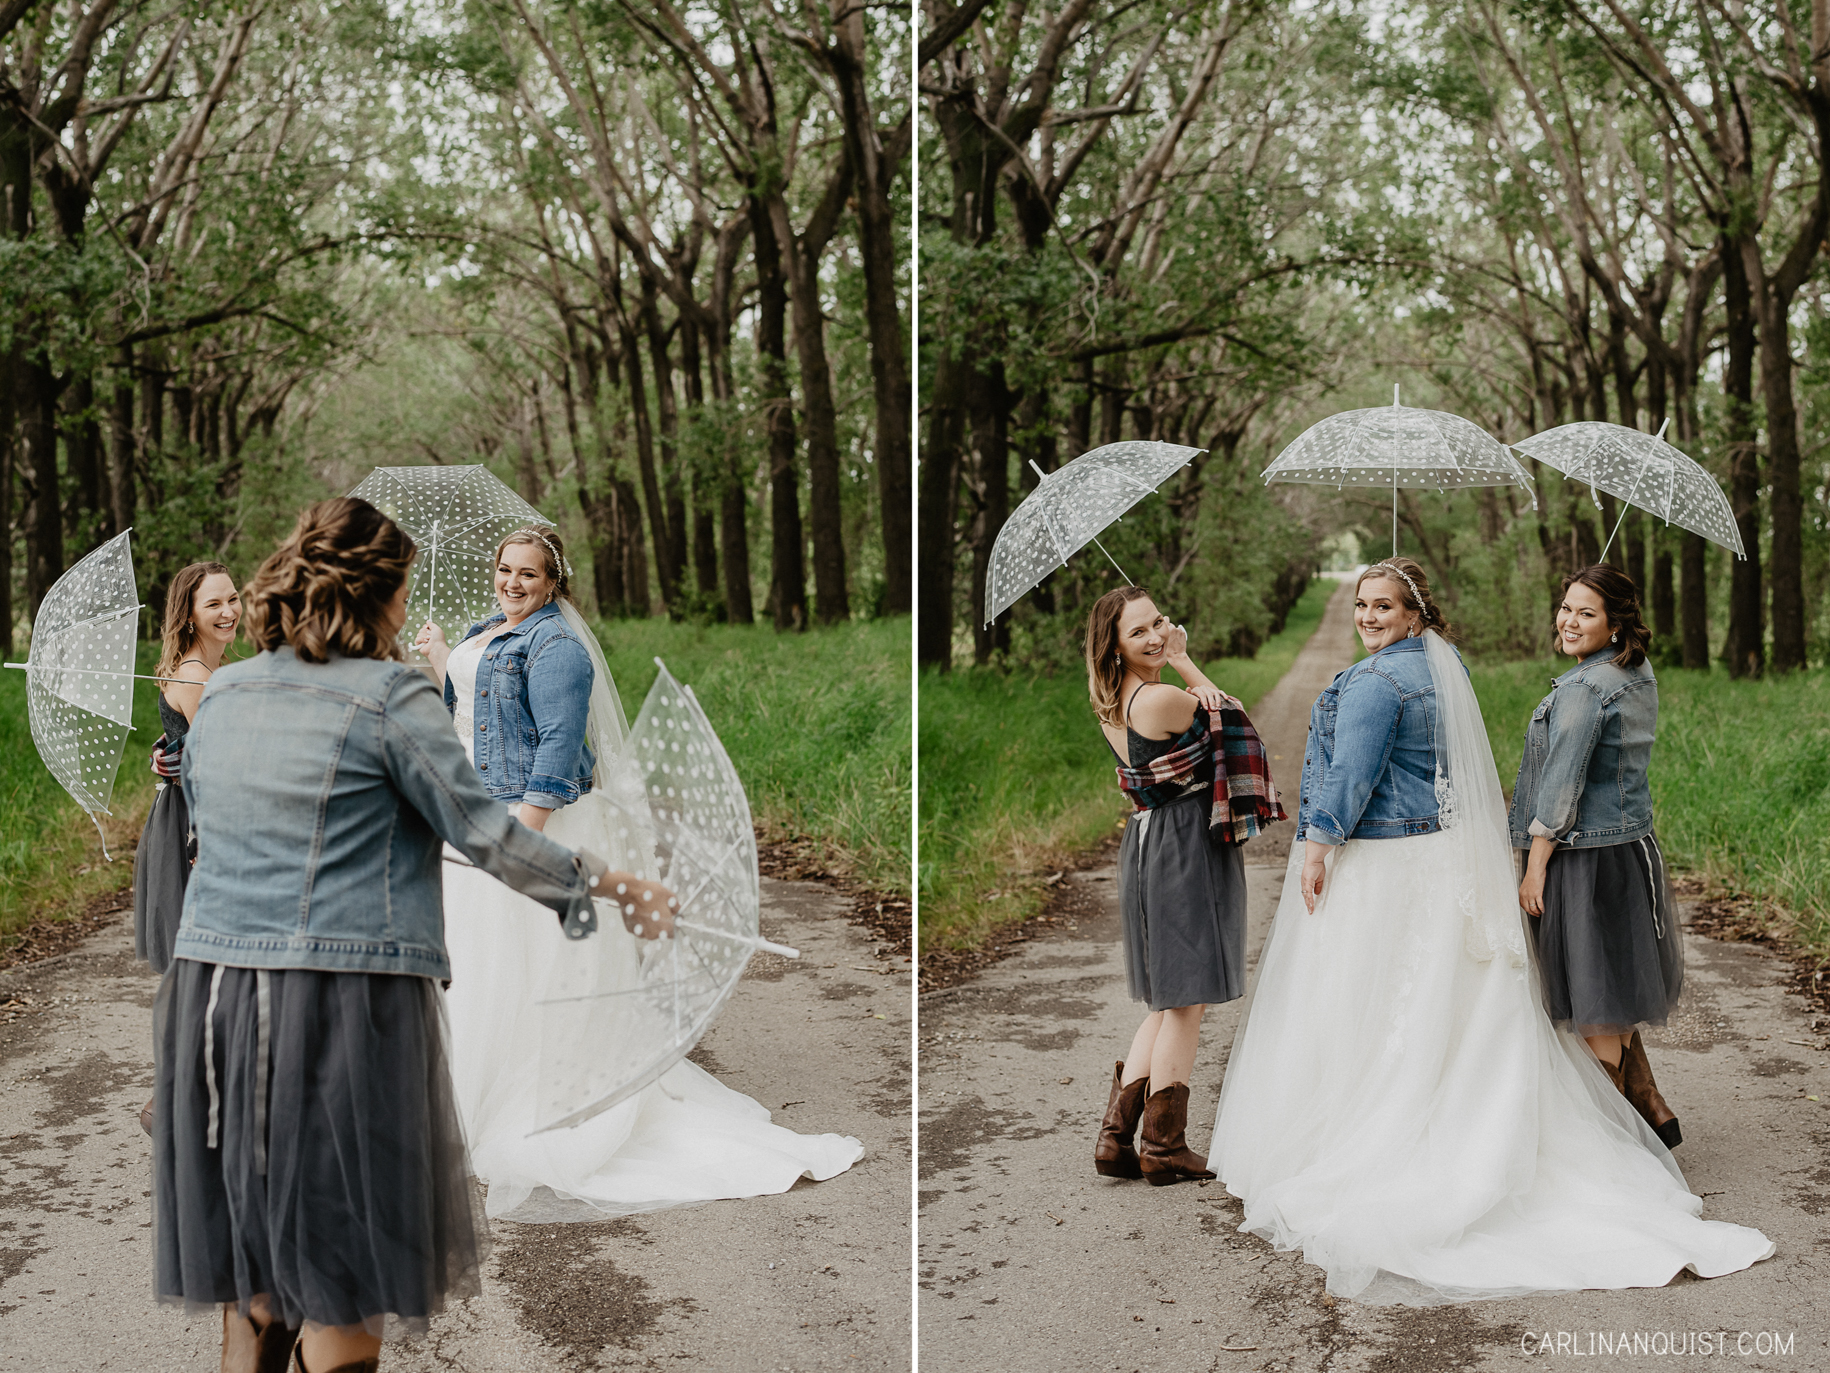 Bridesmaids with Umbrellas